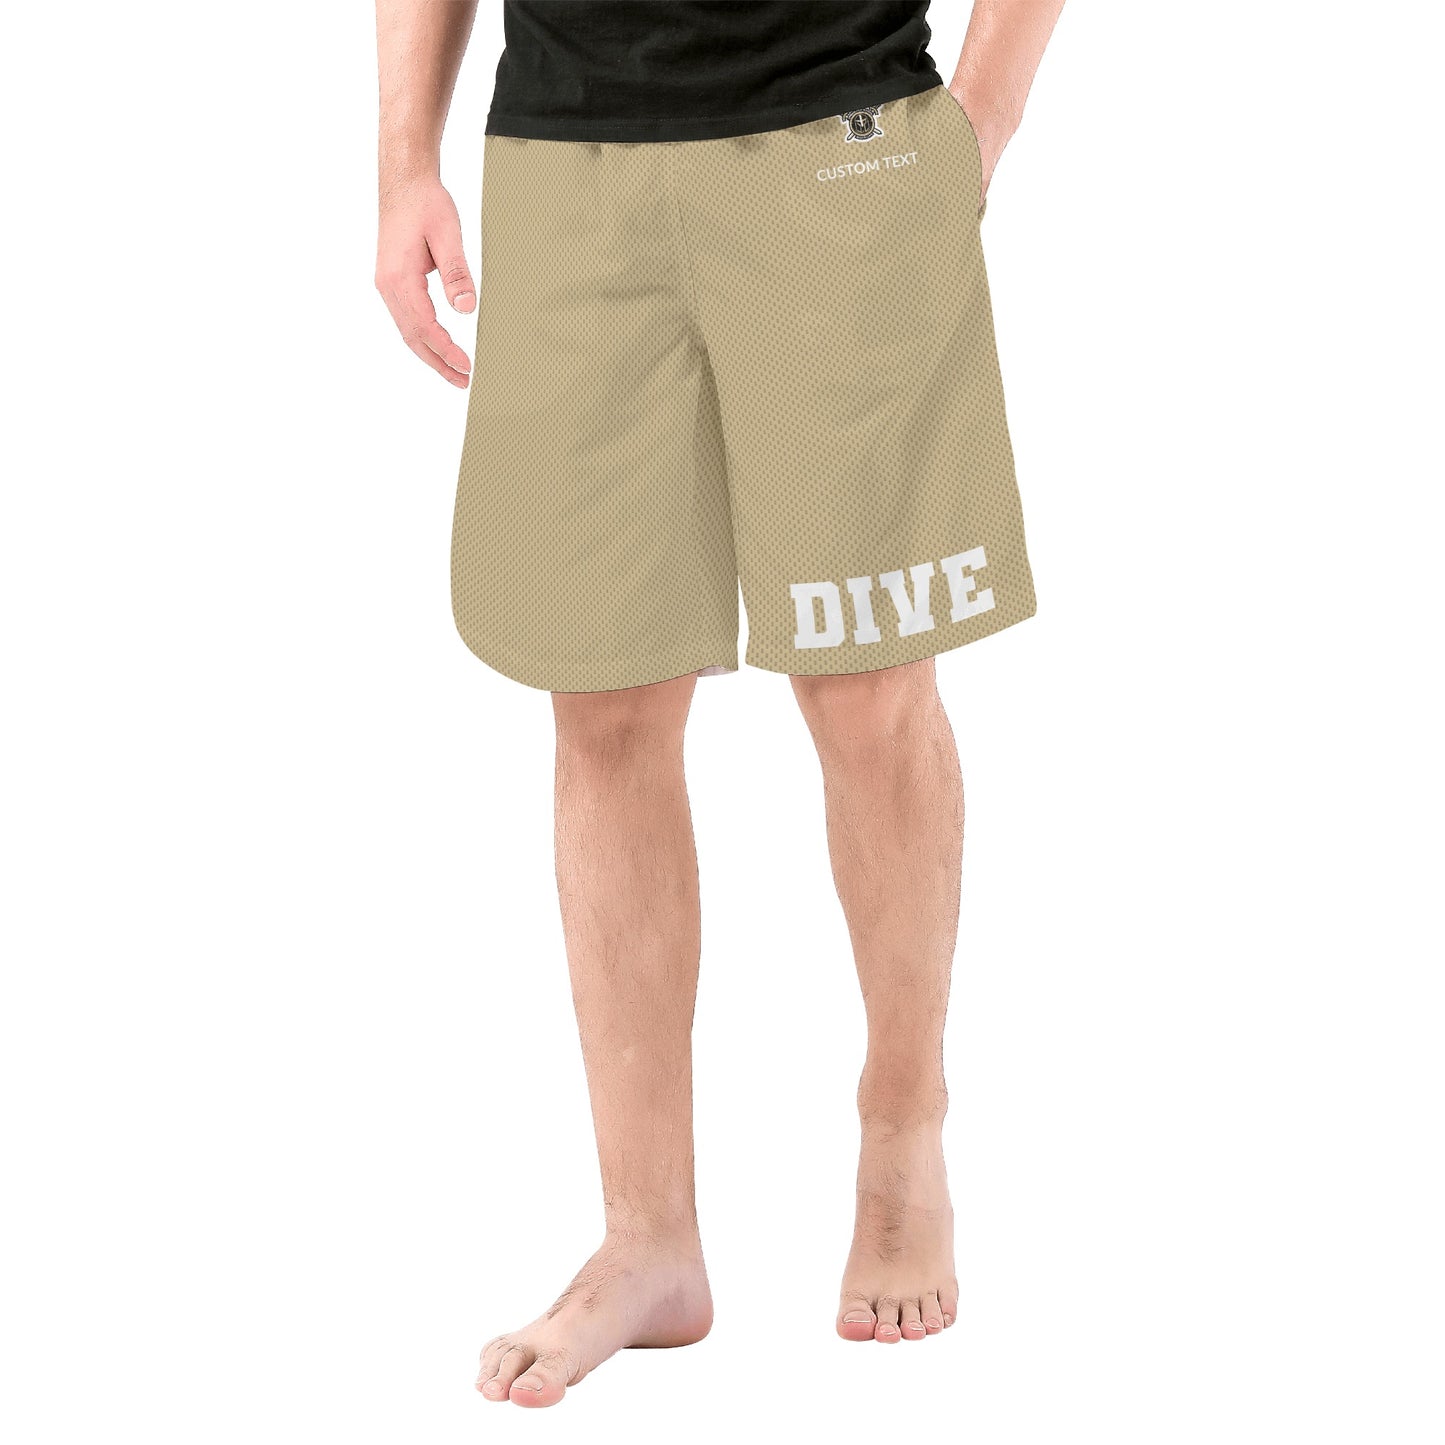 JHS - Men's Beach/Dive/Swim Board Shorts